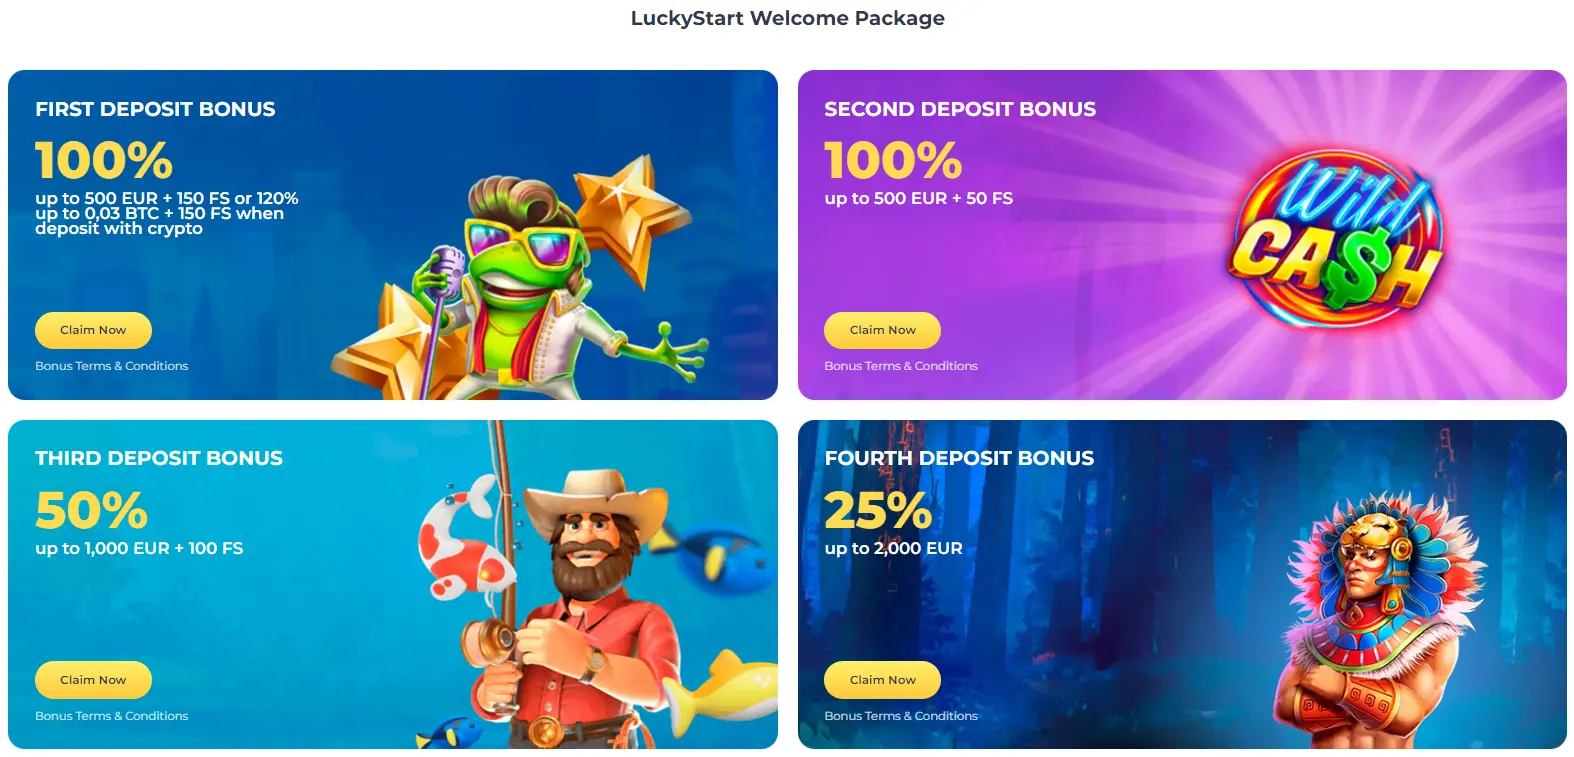 Luckystart casino welcome package